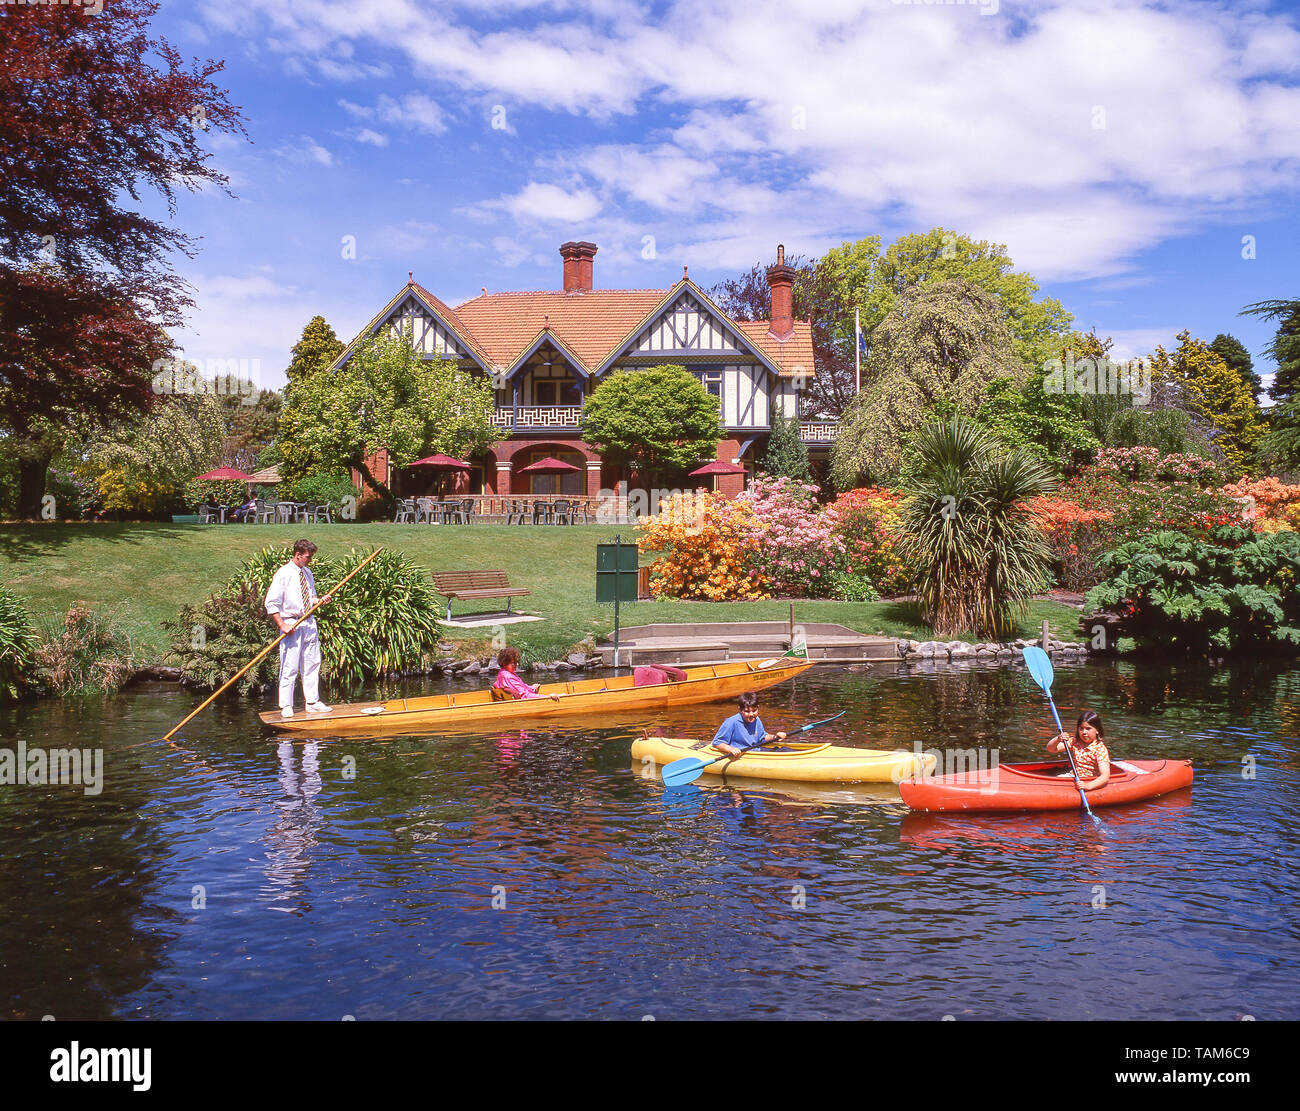 Punt und Kajaks auf dem Fluss Avon bei Mona Vale Garden Park, Mona Vale Avenue Riccarton, Christchurch, Canterbury, Neuseeland Stockfoto